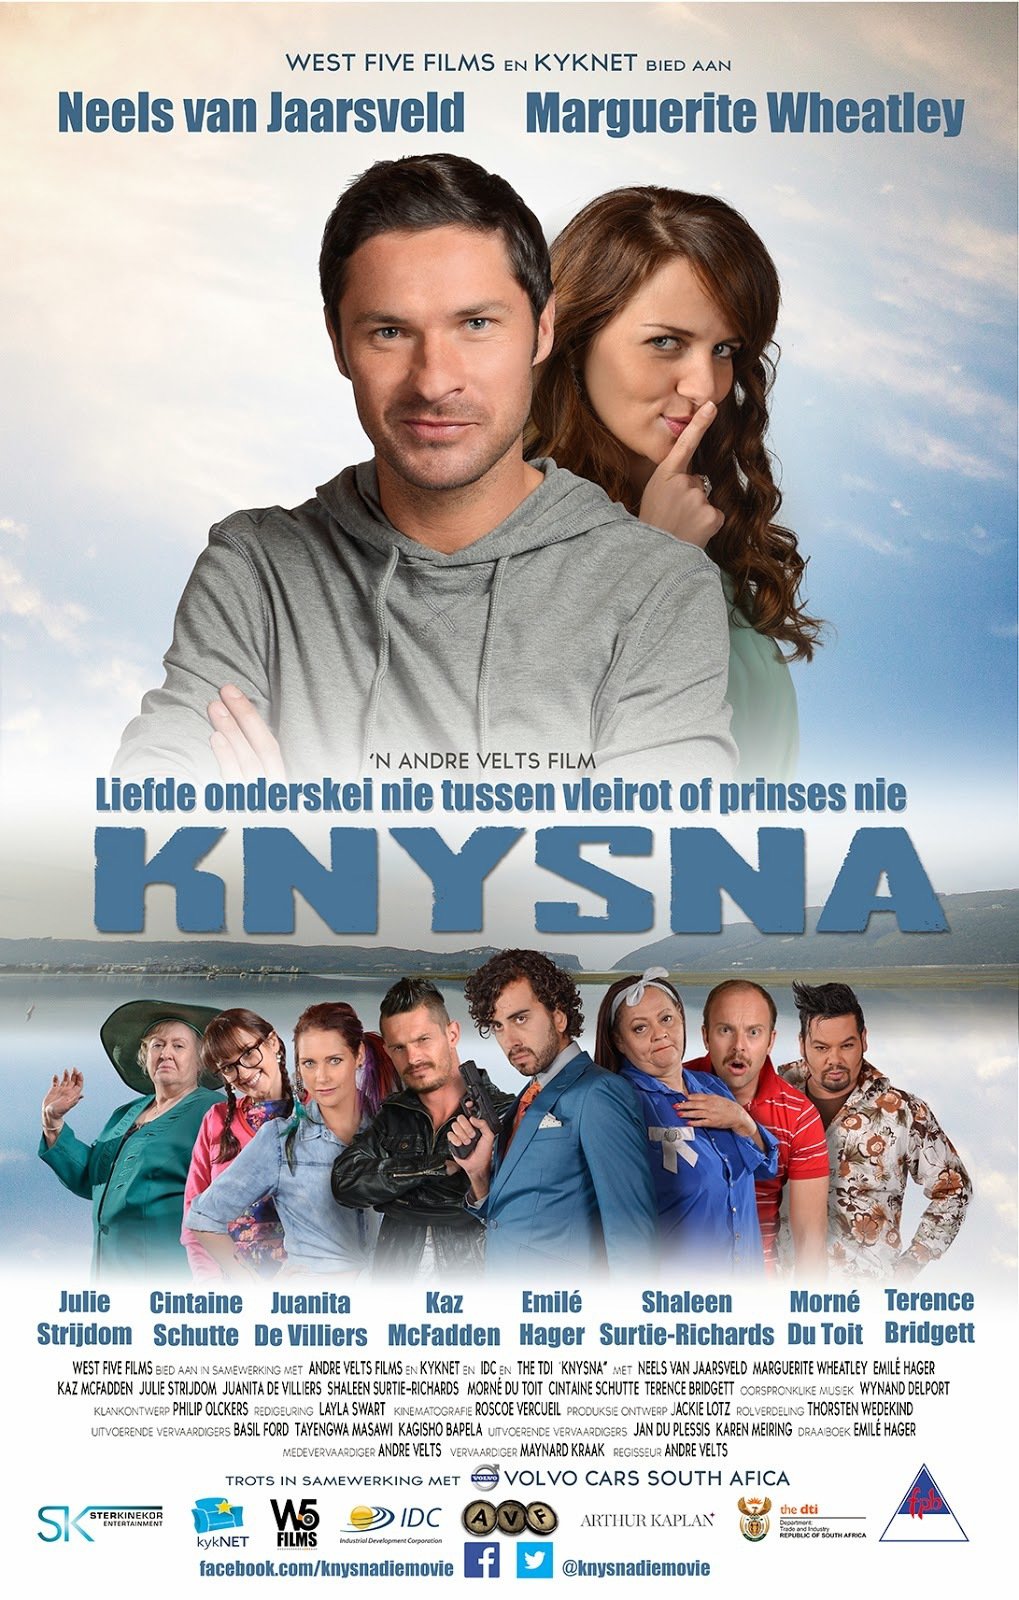 Poster for the movie "Knysna"